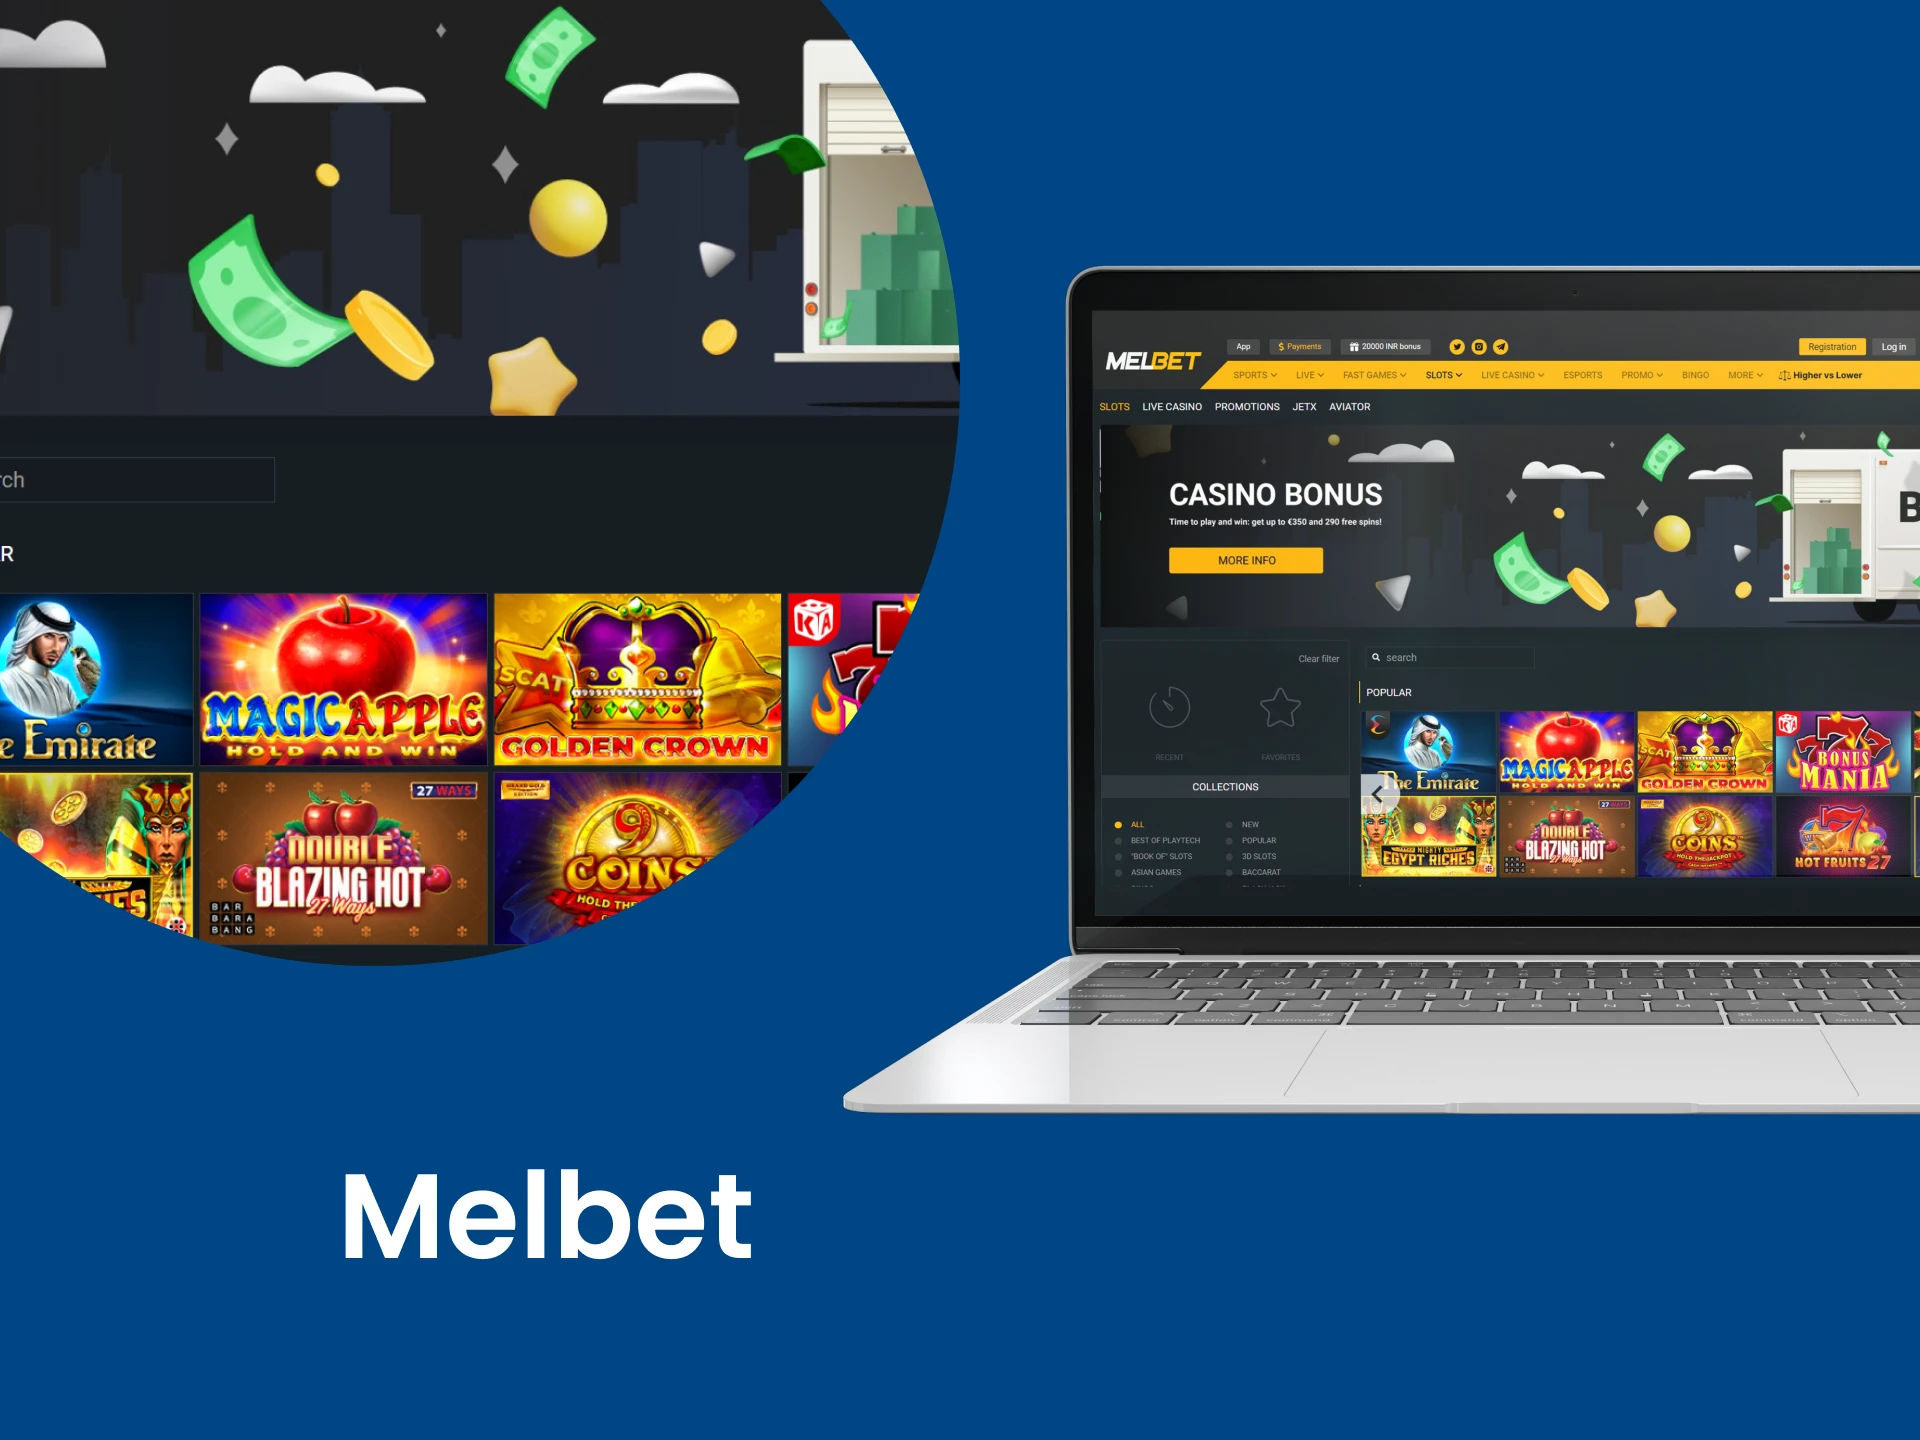 For casino games, choose Melbet.